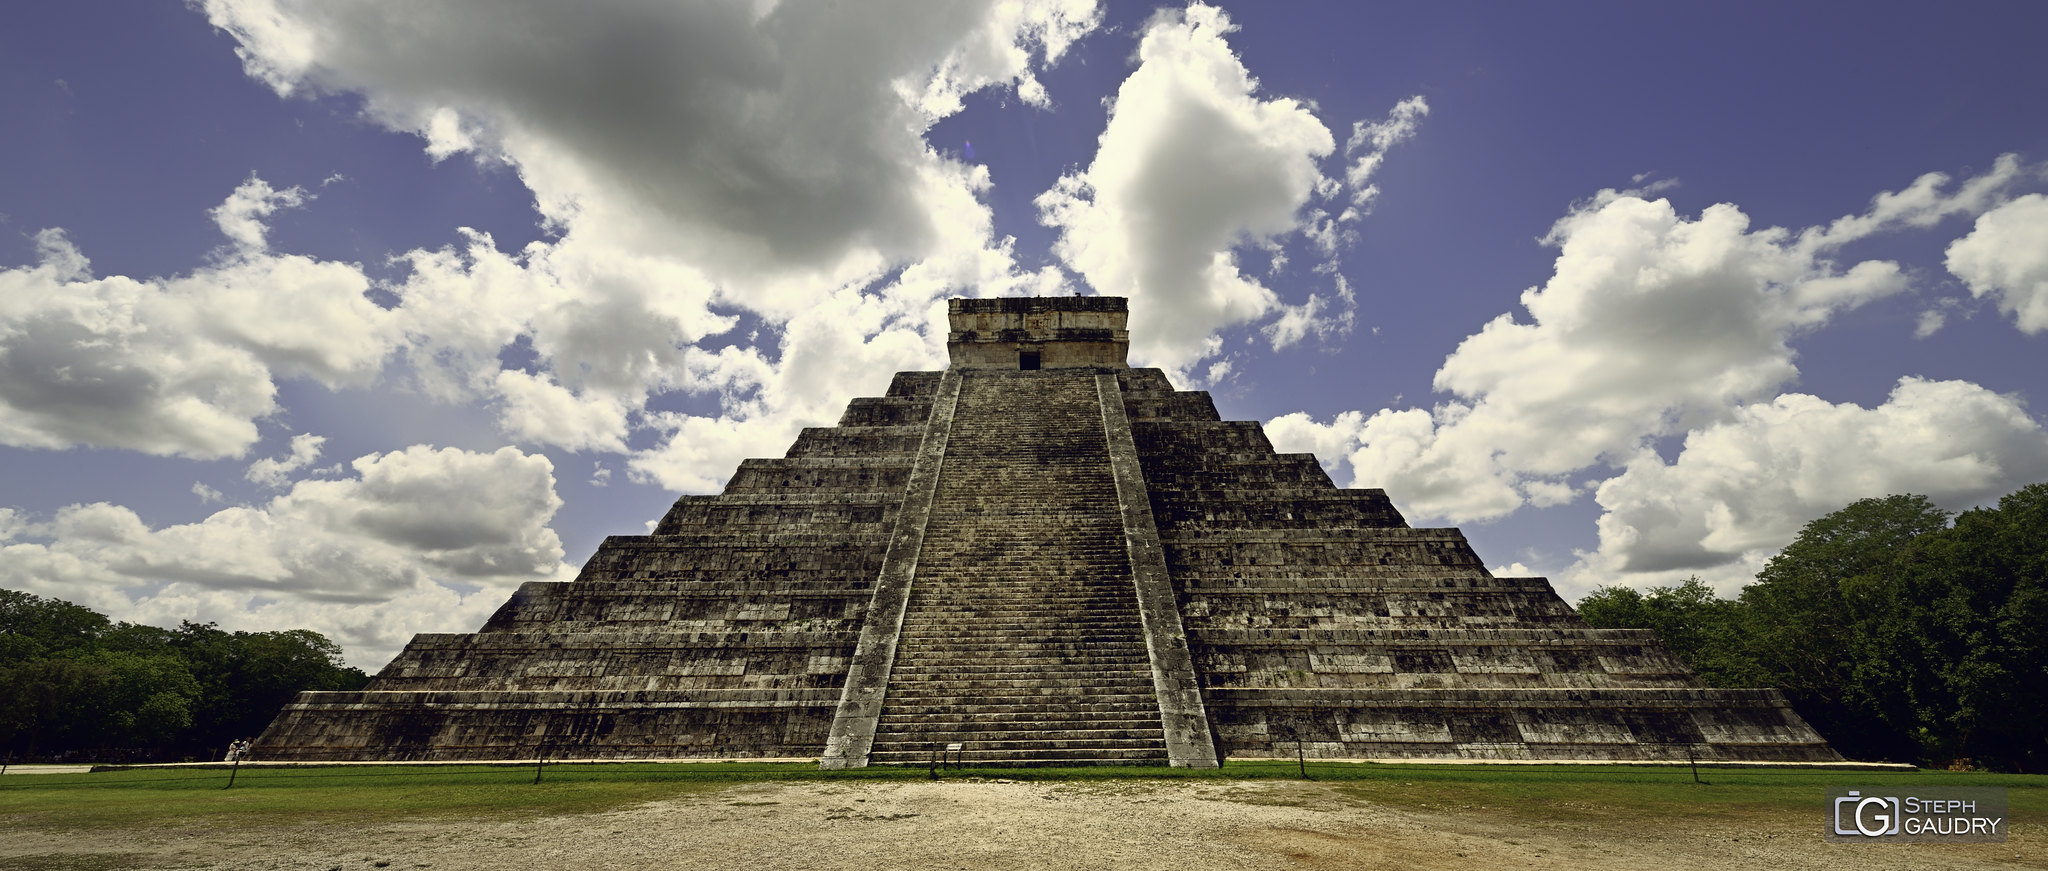 Chichen Itza - El Castillo (pyramide de Kukulcán) [Klik om de diavoorstelling te starten]